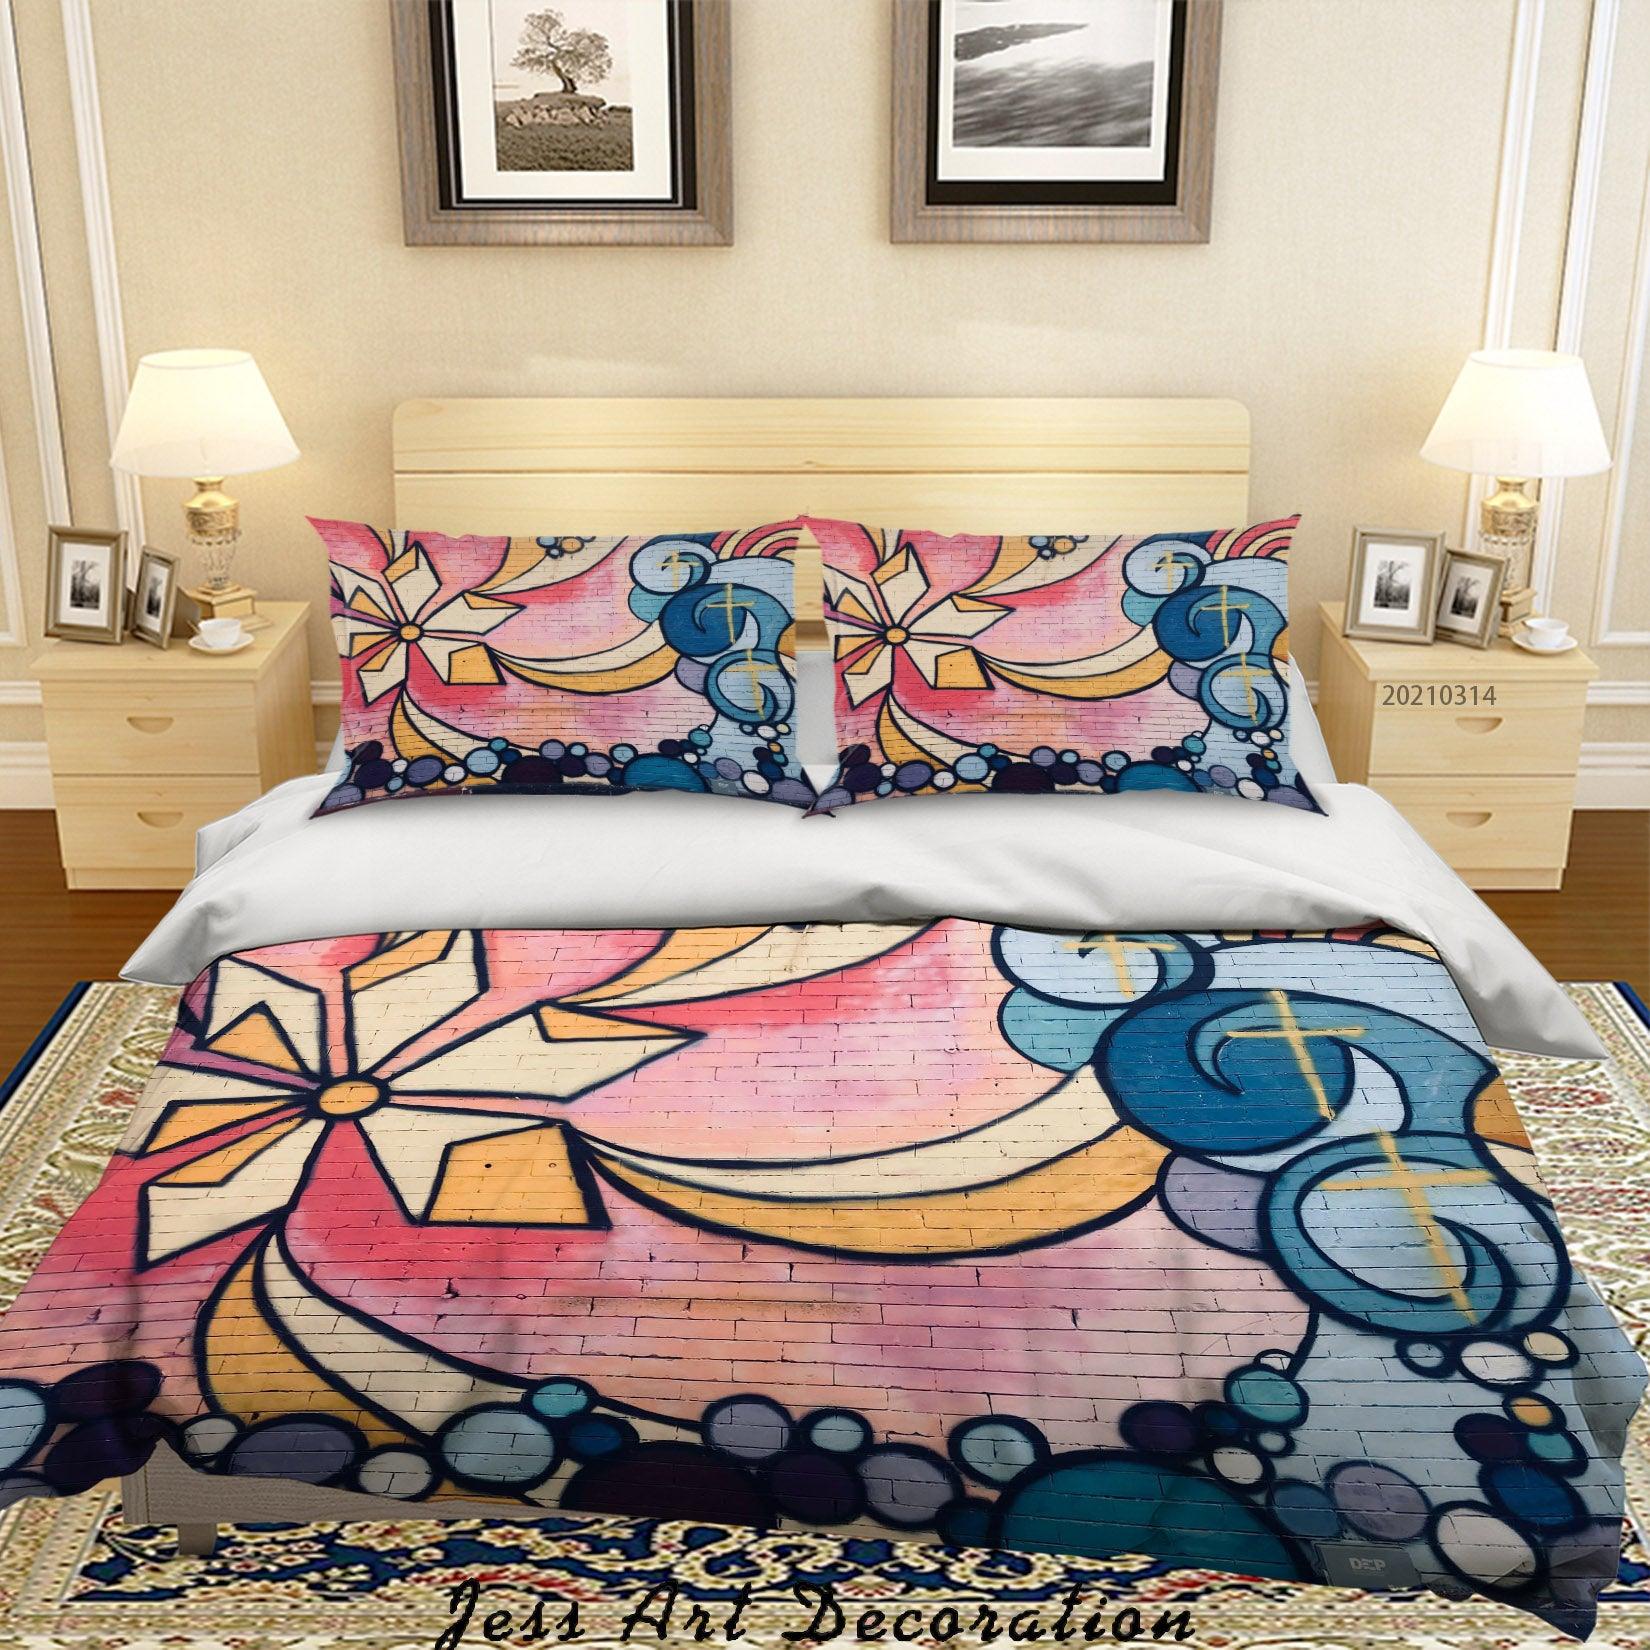 3D Abstract Color Graffiti Quilt Cover Set Bedding Set Duvet Cover Pillowcases 184- Jess Art Decoration